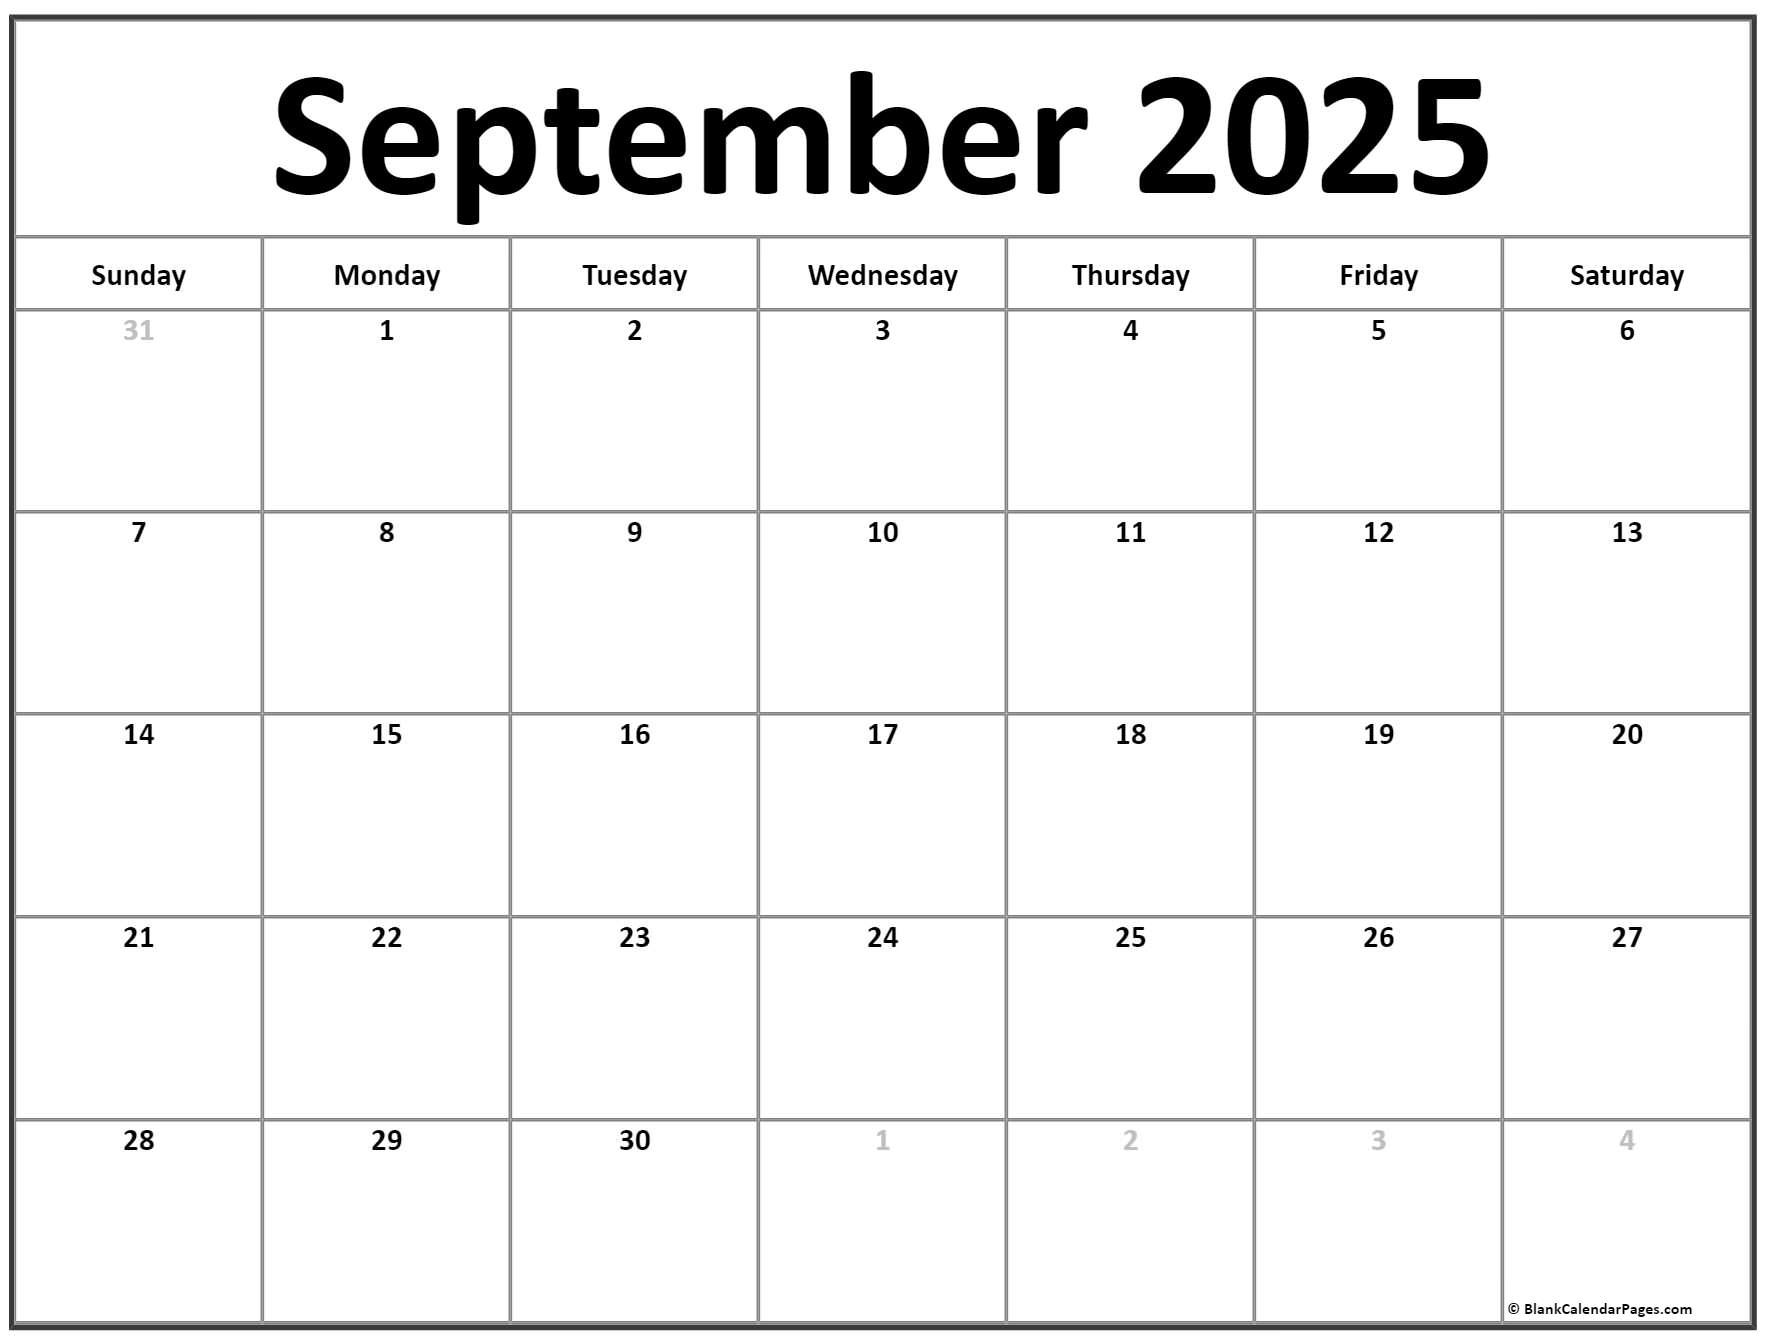 September 2025 calendar | free printable calendar